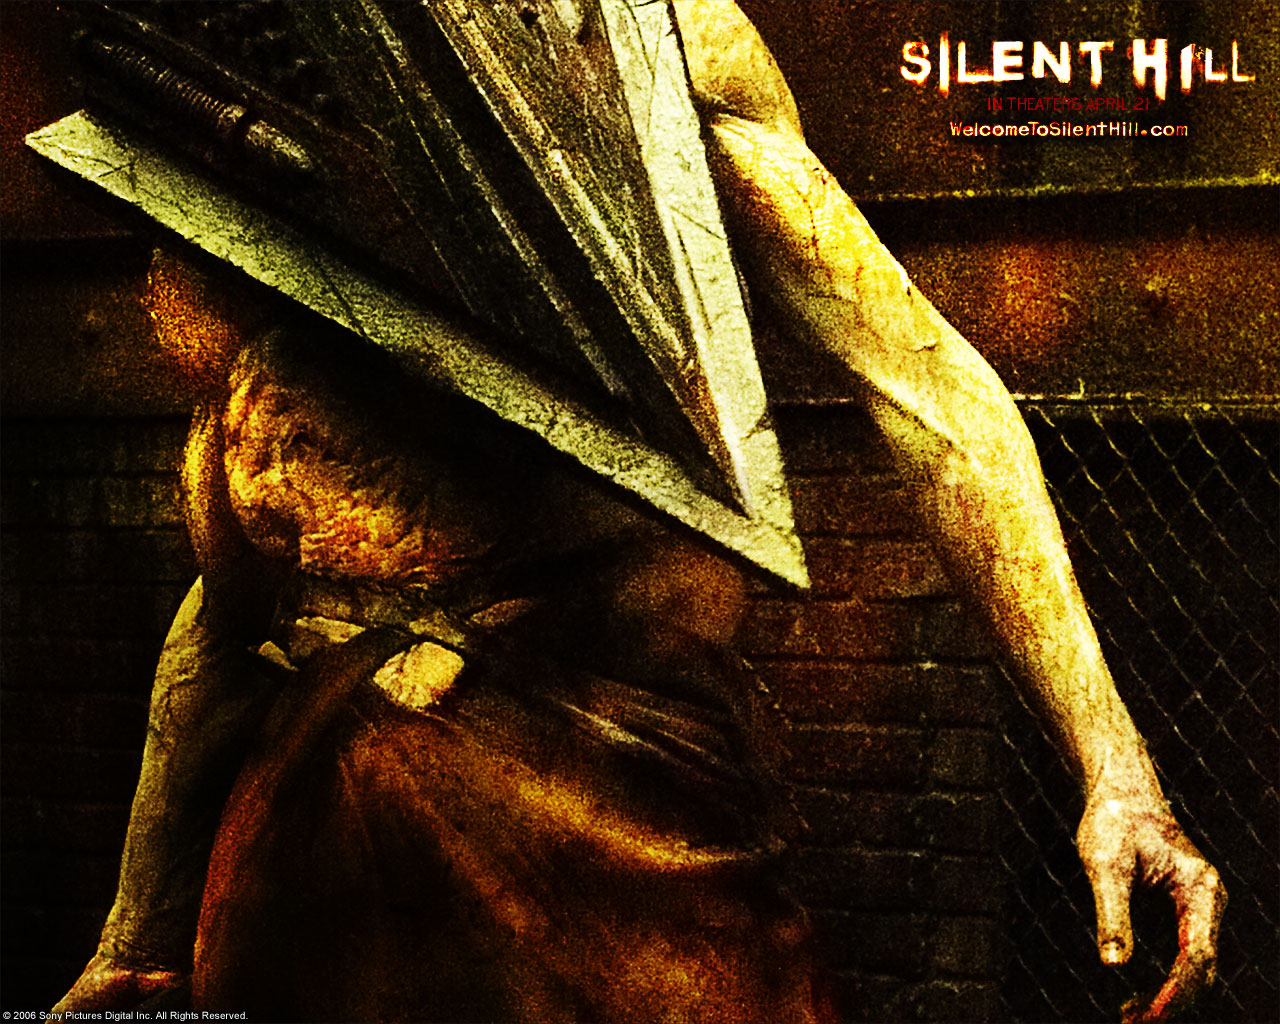 Emulador Game On Silent Hill Wallpaper